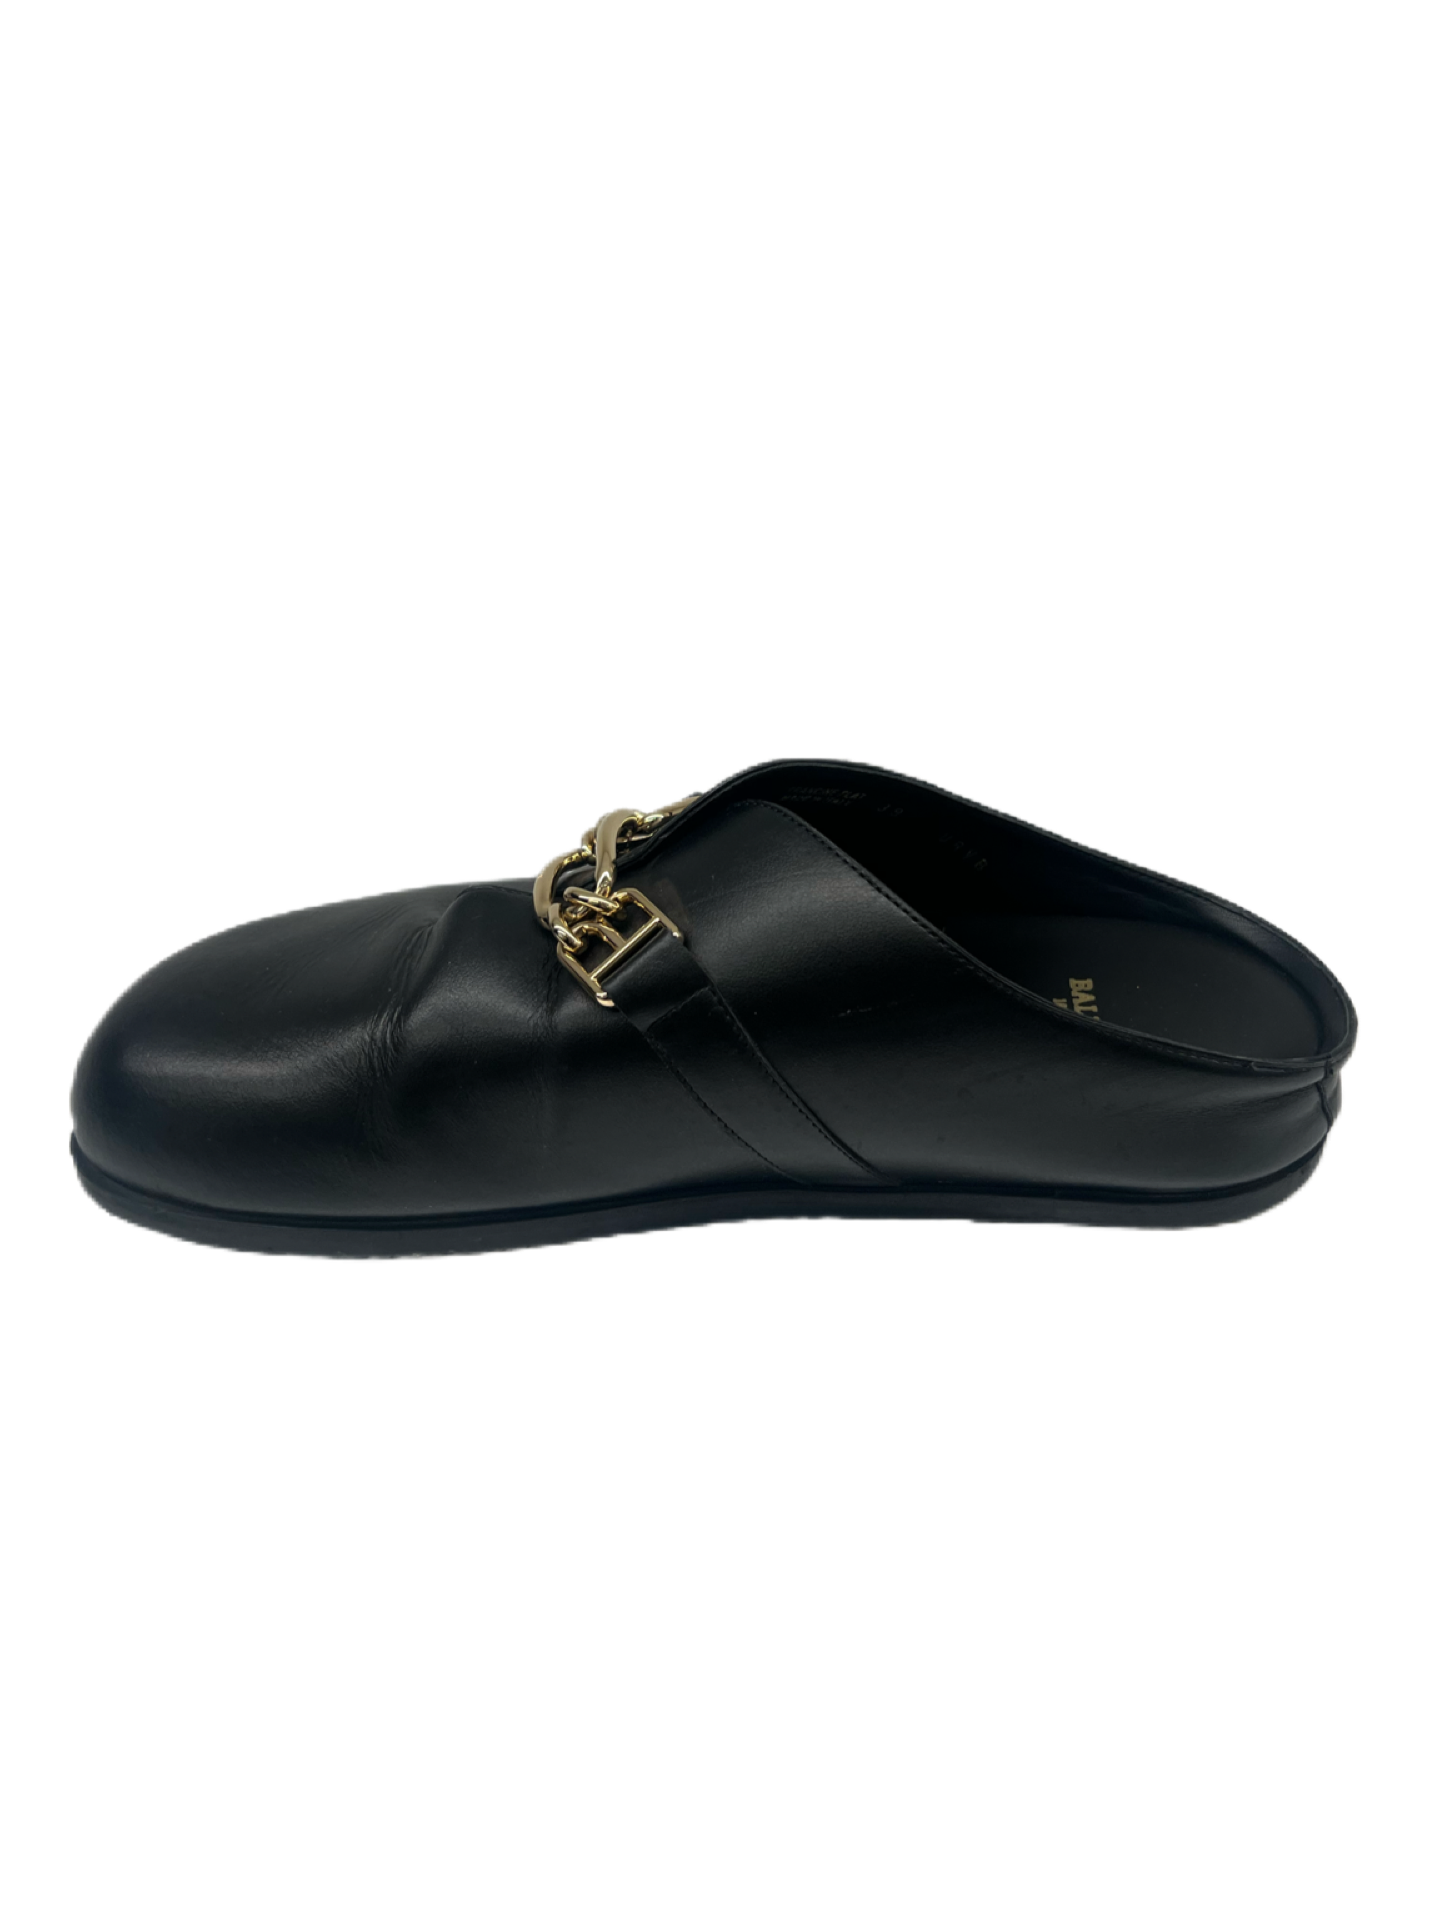 Bally Black Gold BB Link Slip on Sandals. Size: 39